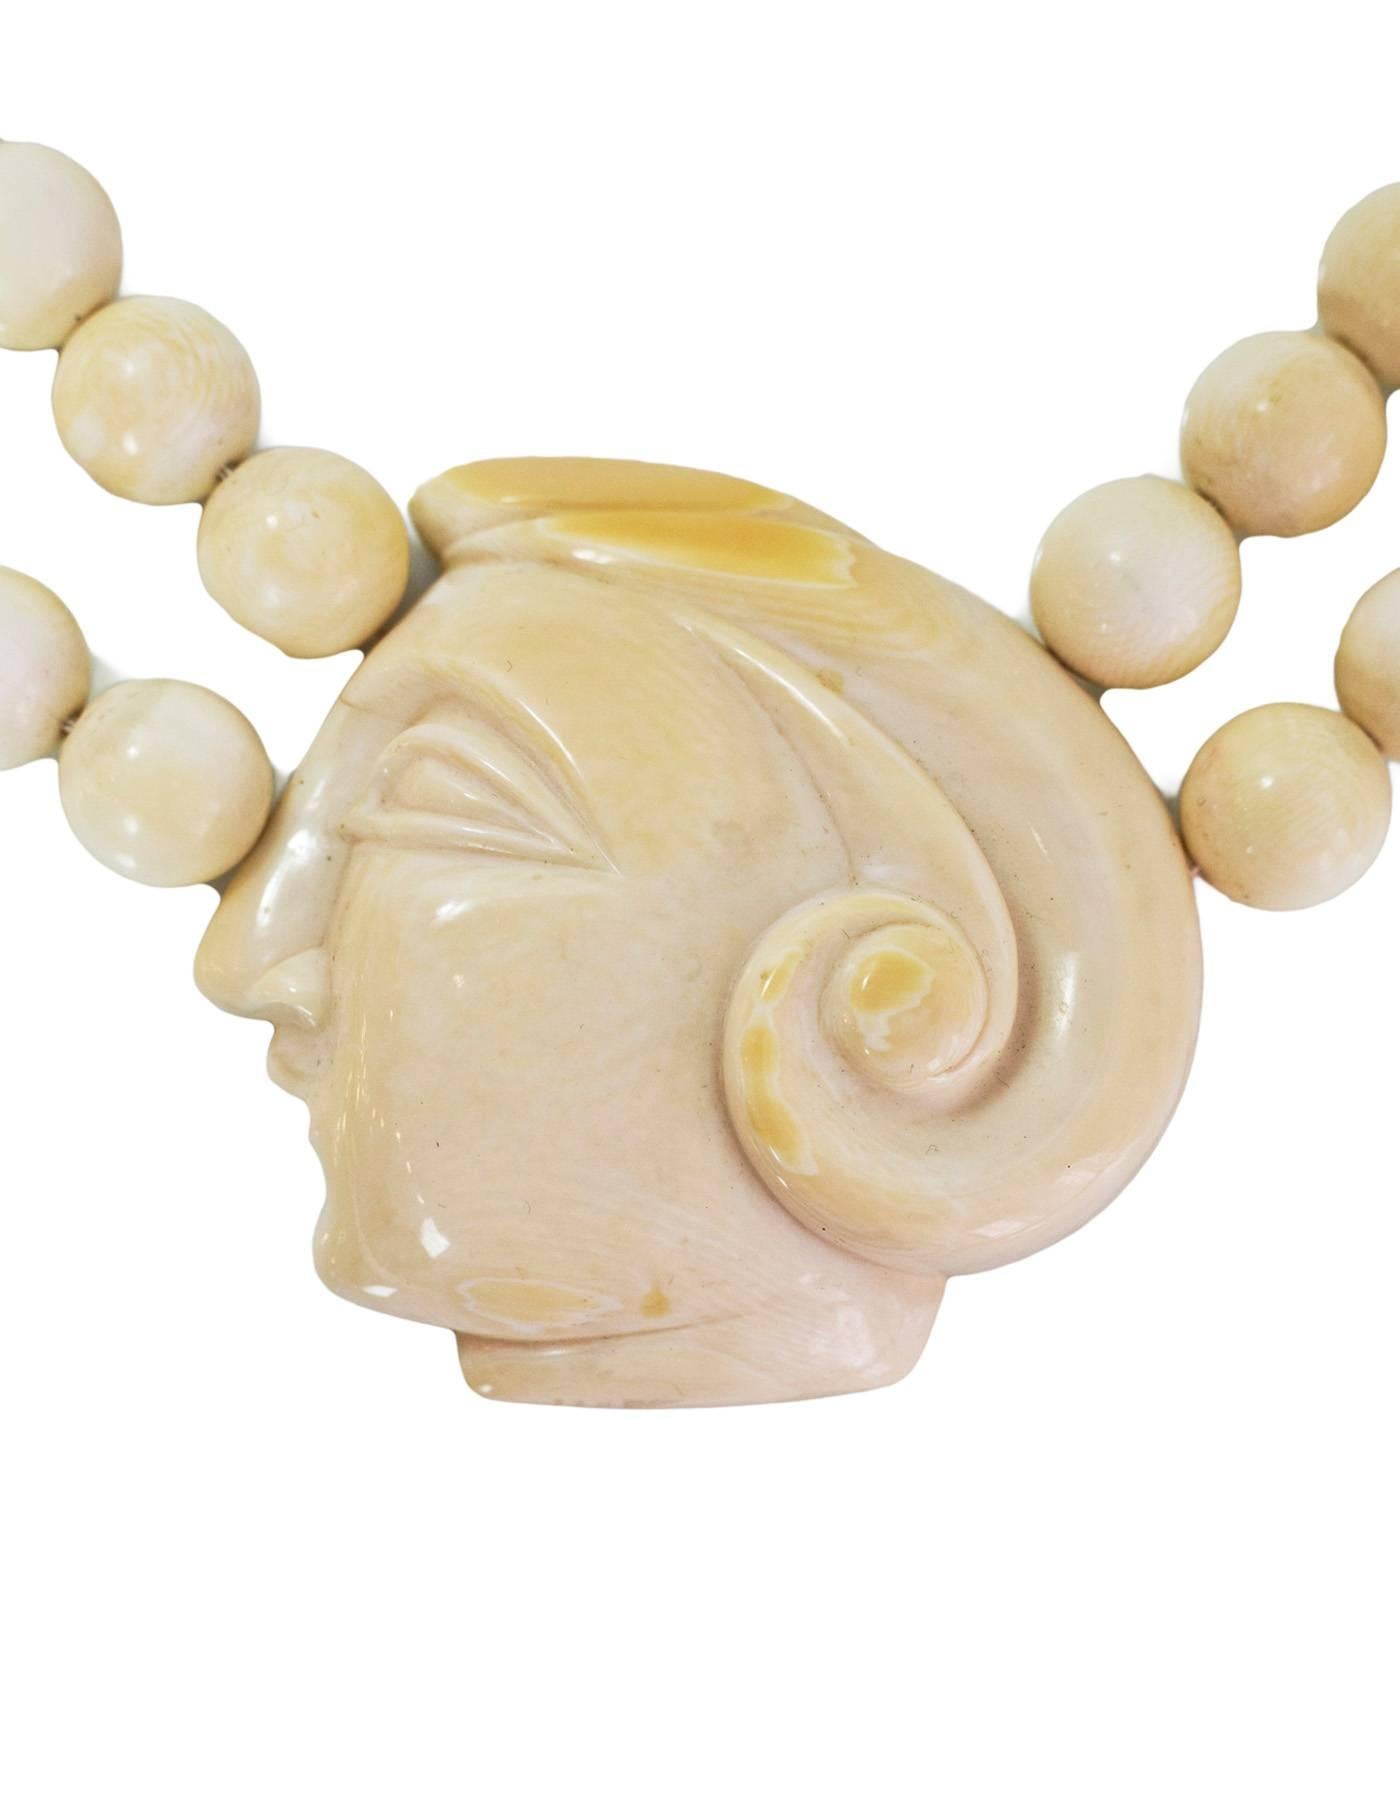 ivory necklace